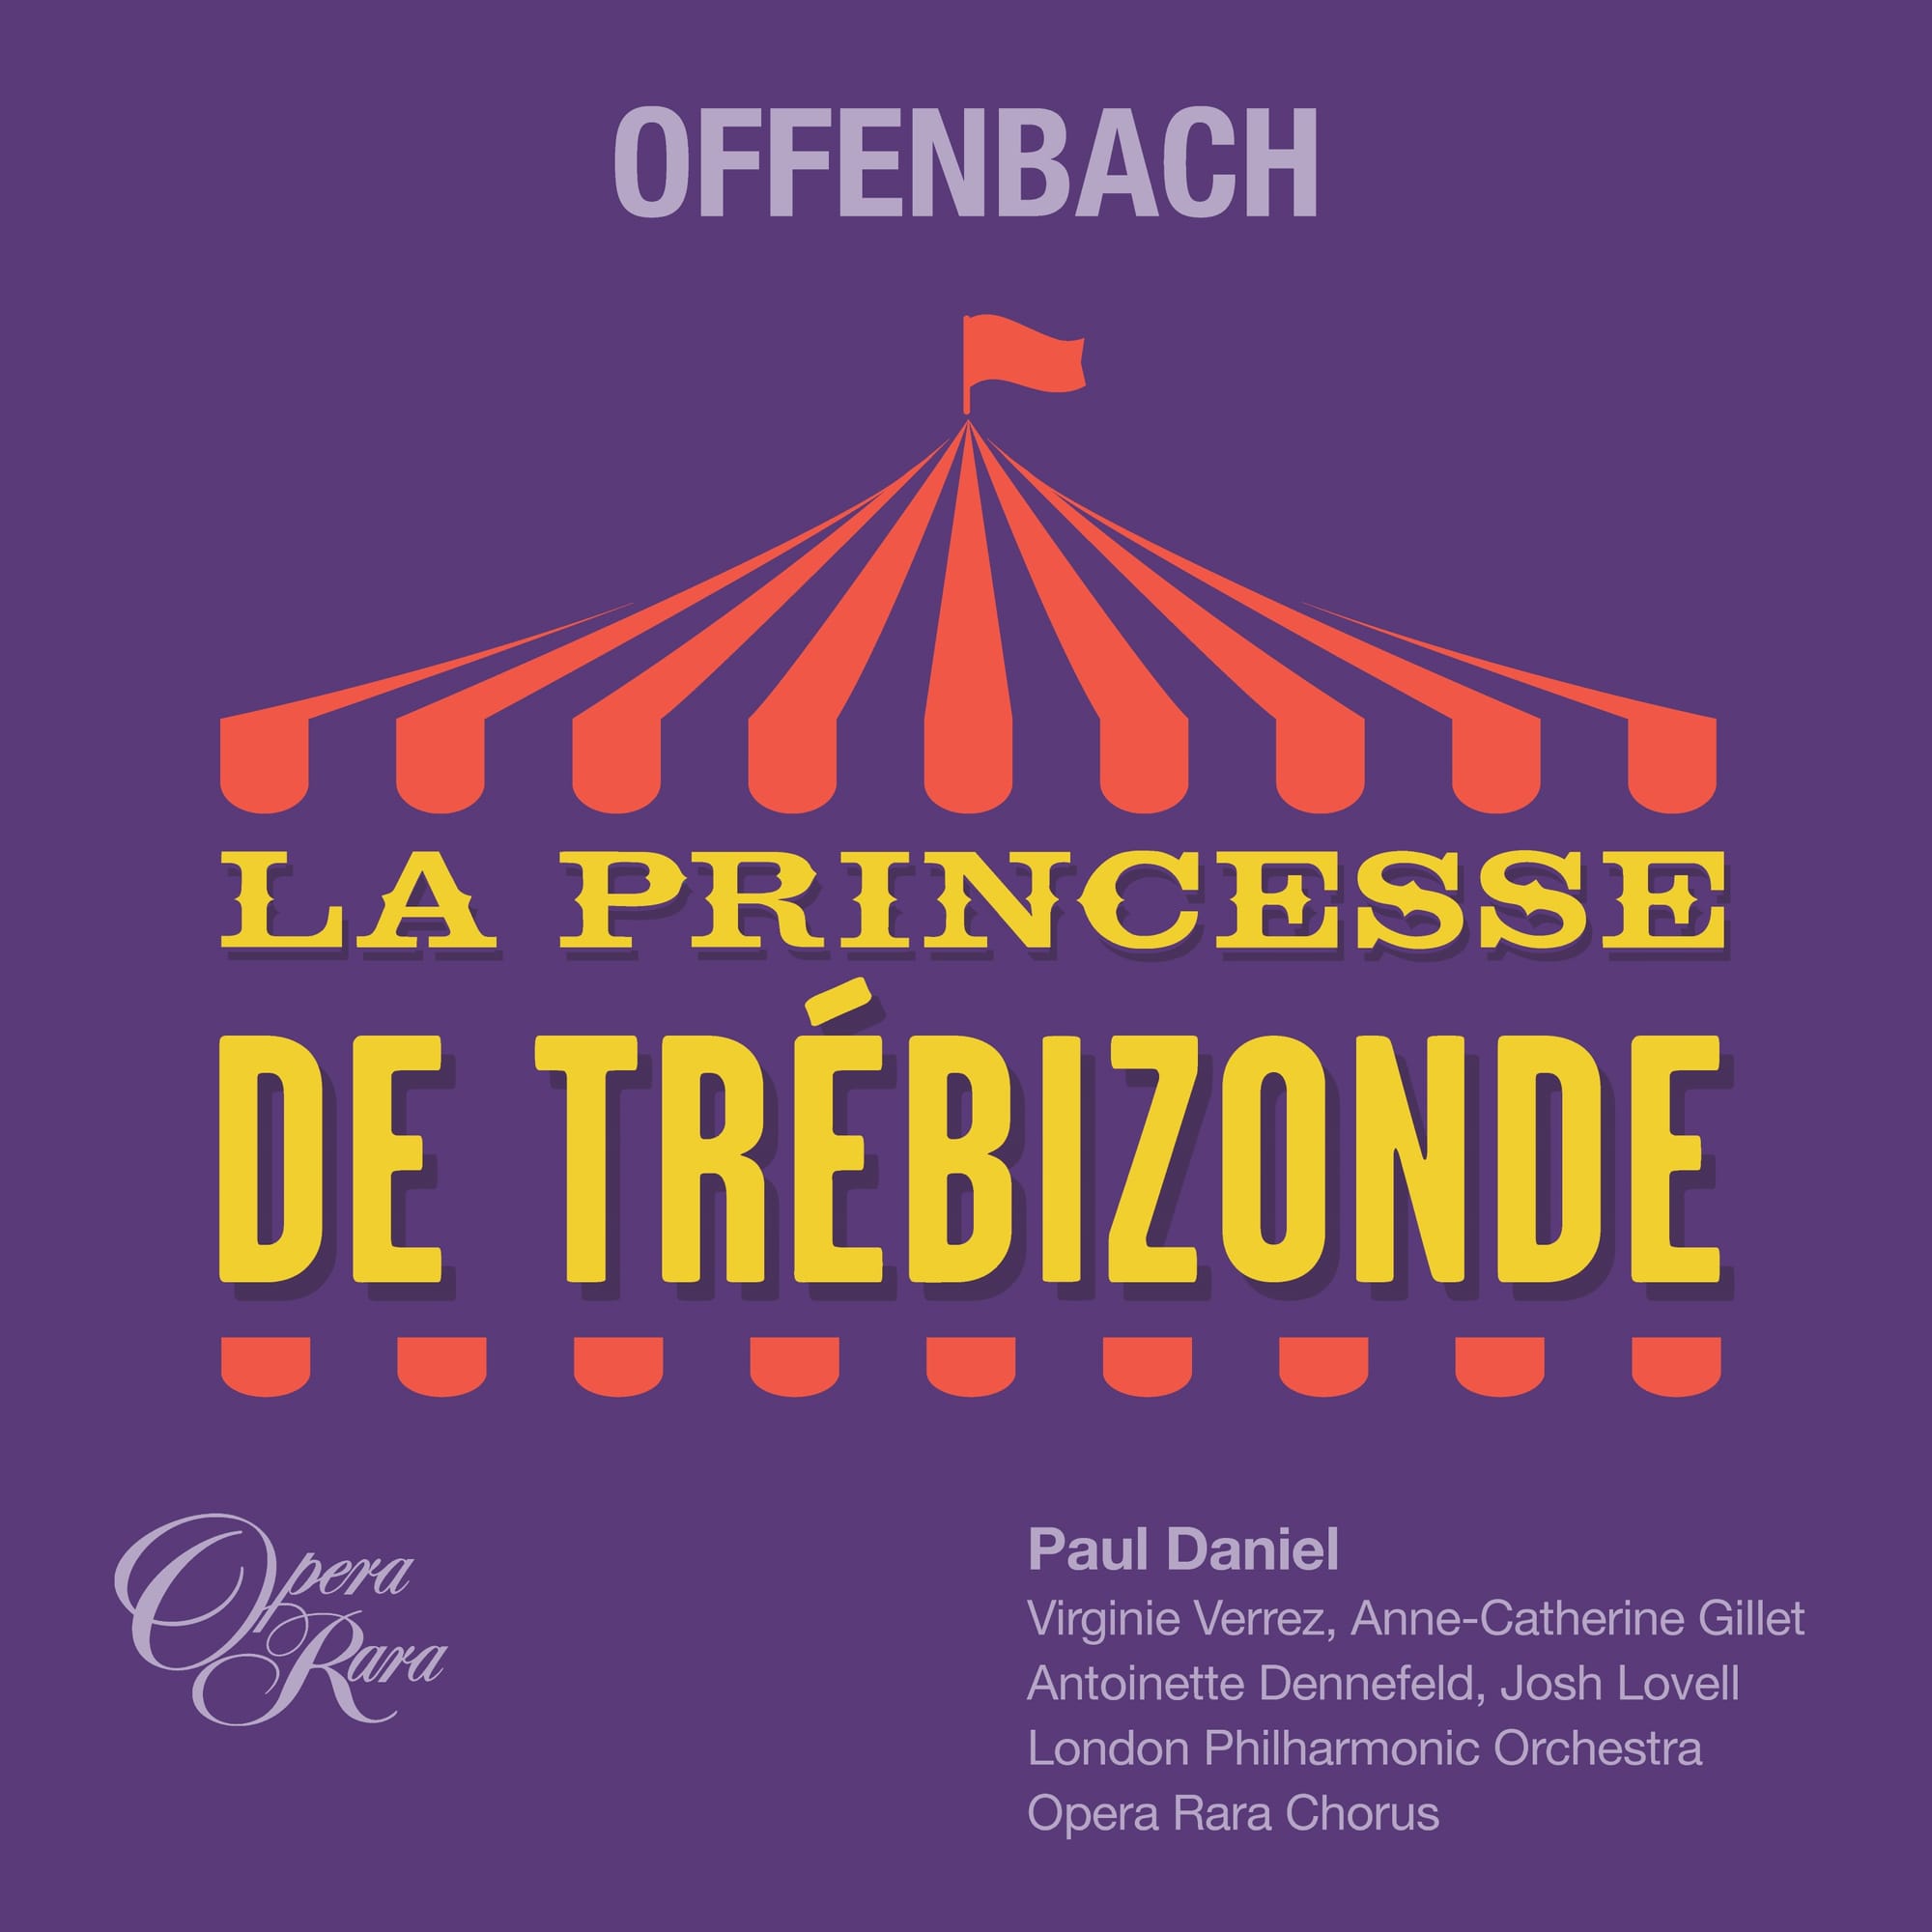 Offenbach's “La Princesse de Trébizonde” from Opera Rara